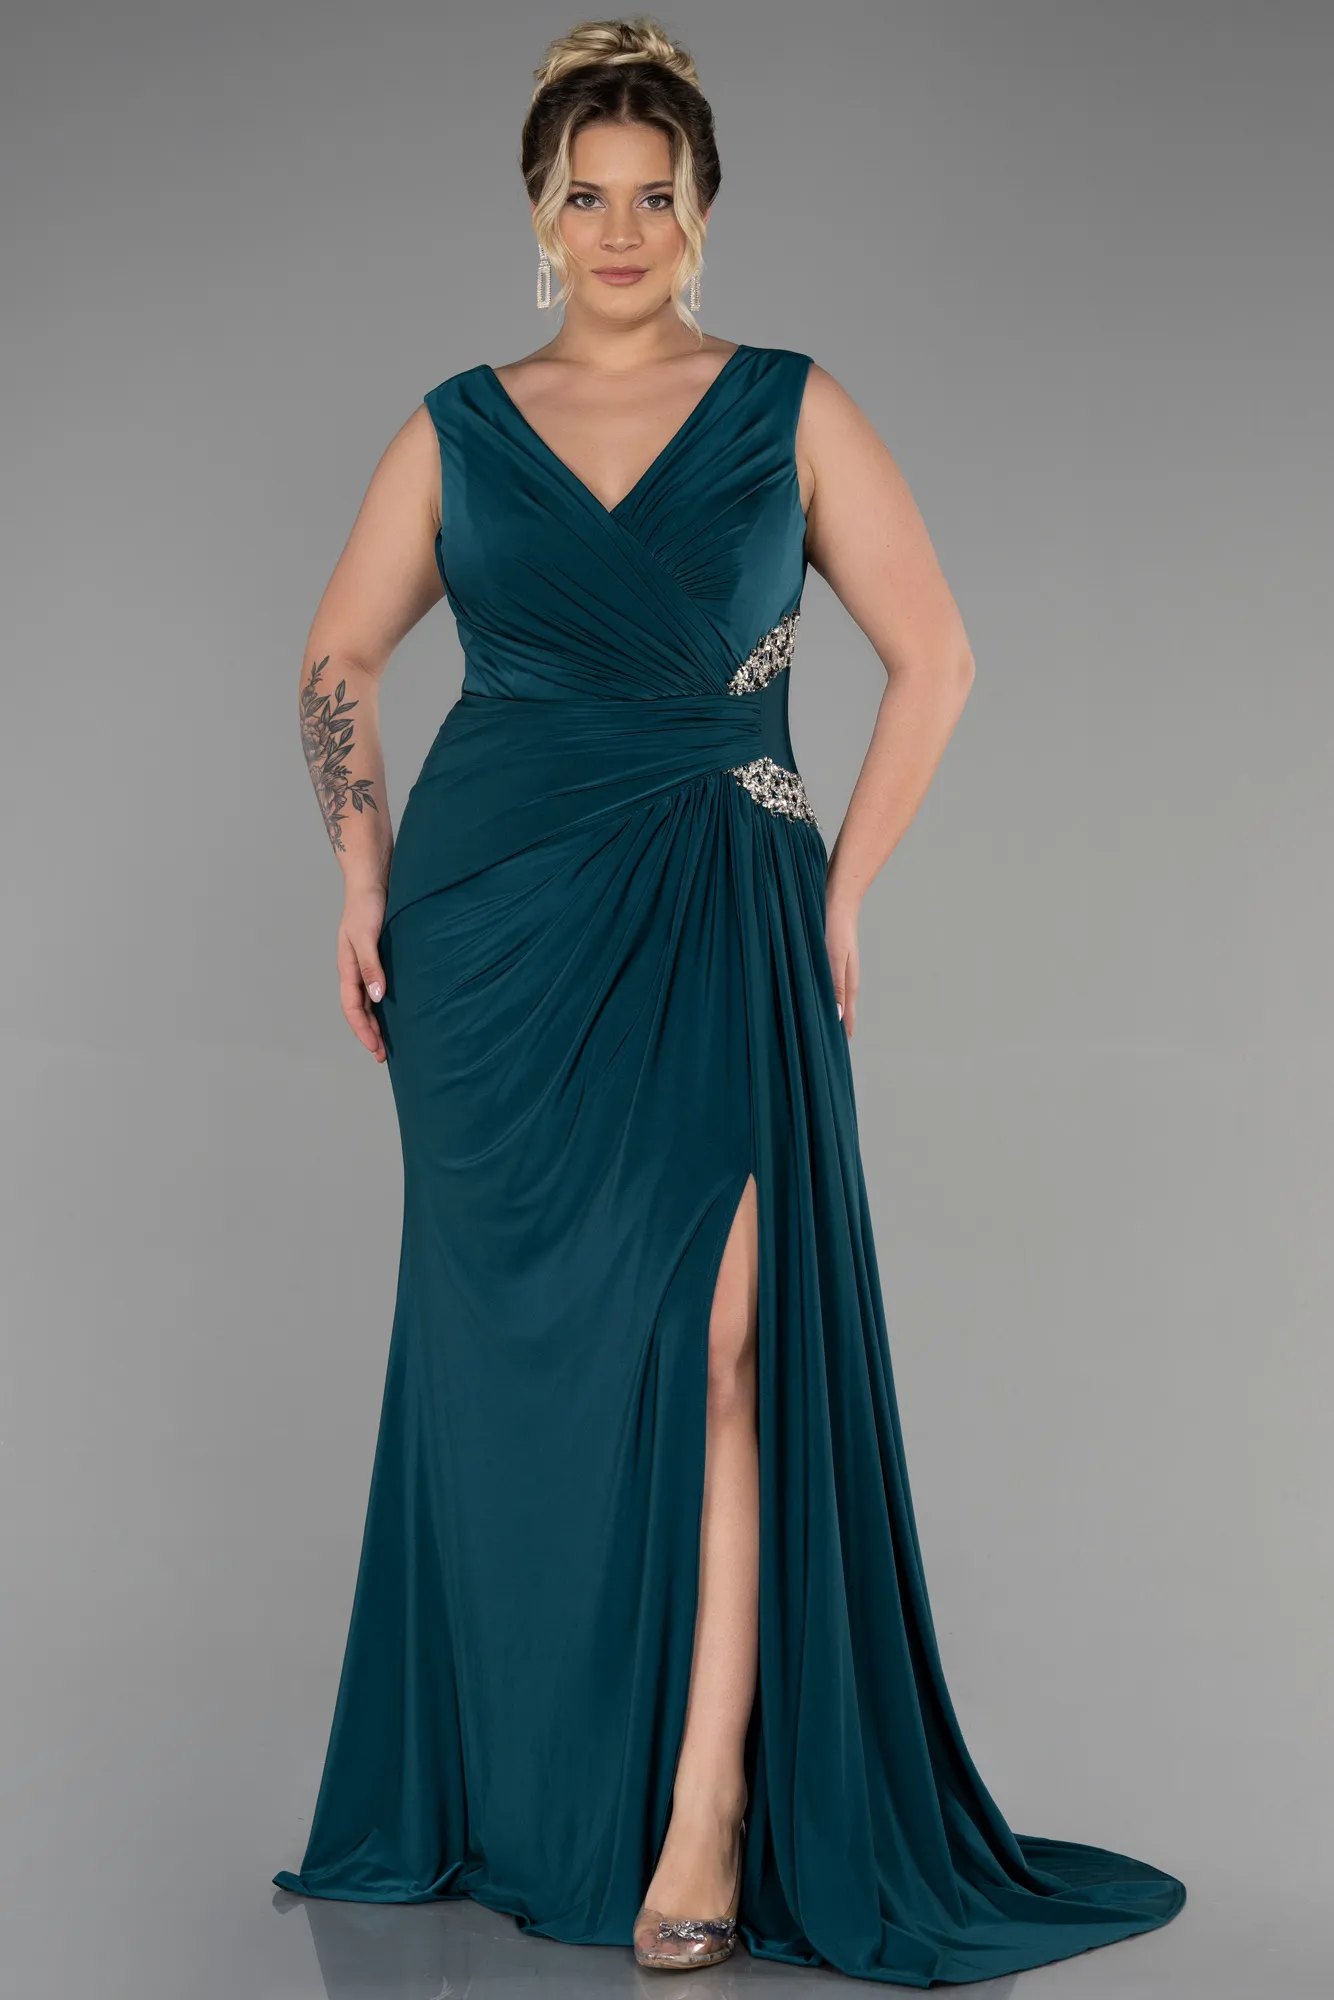 Emerald Green-Long Plus Size Evening Dress ABU3438